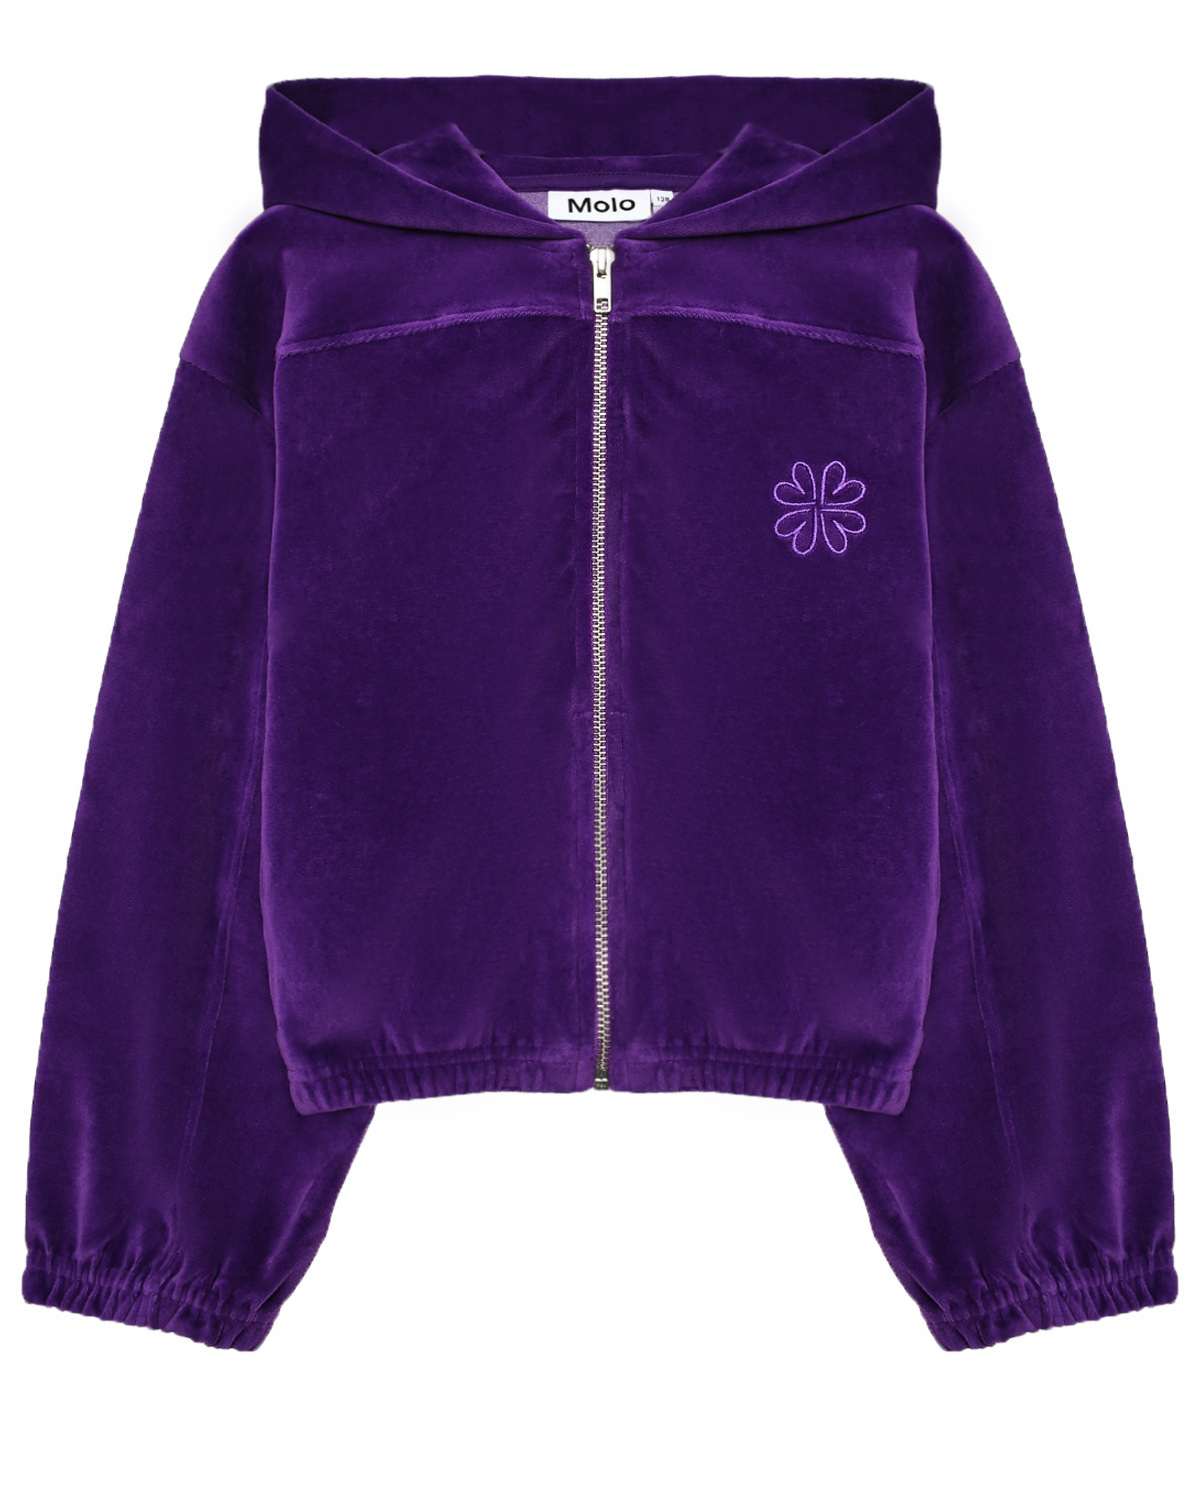 Спортивная куртка Madeleine Purple Dusk Molo, размер 140, цвет фиолетовый